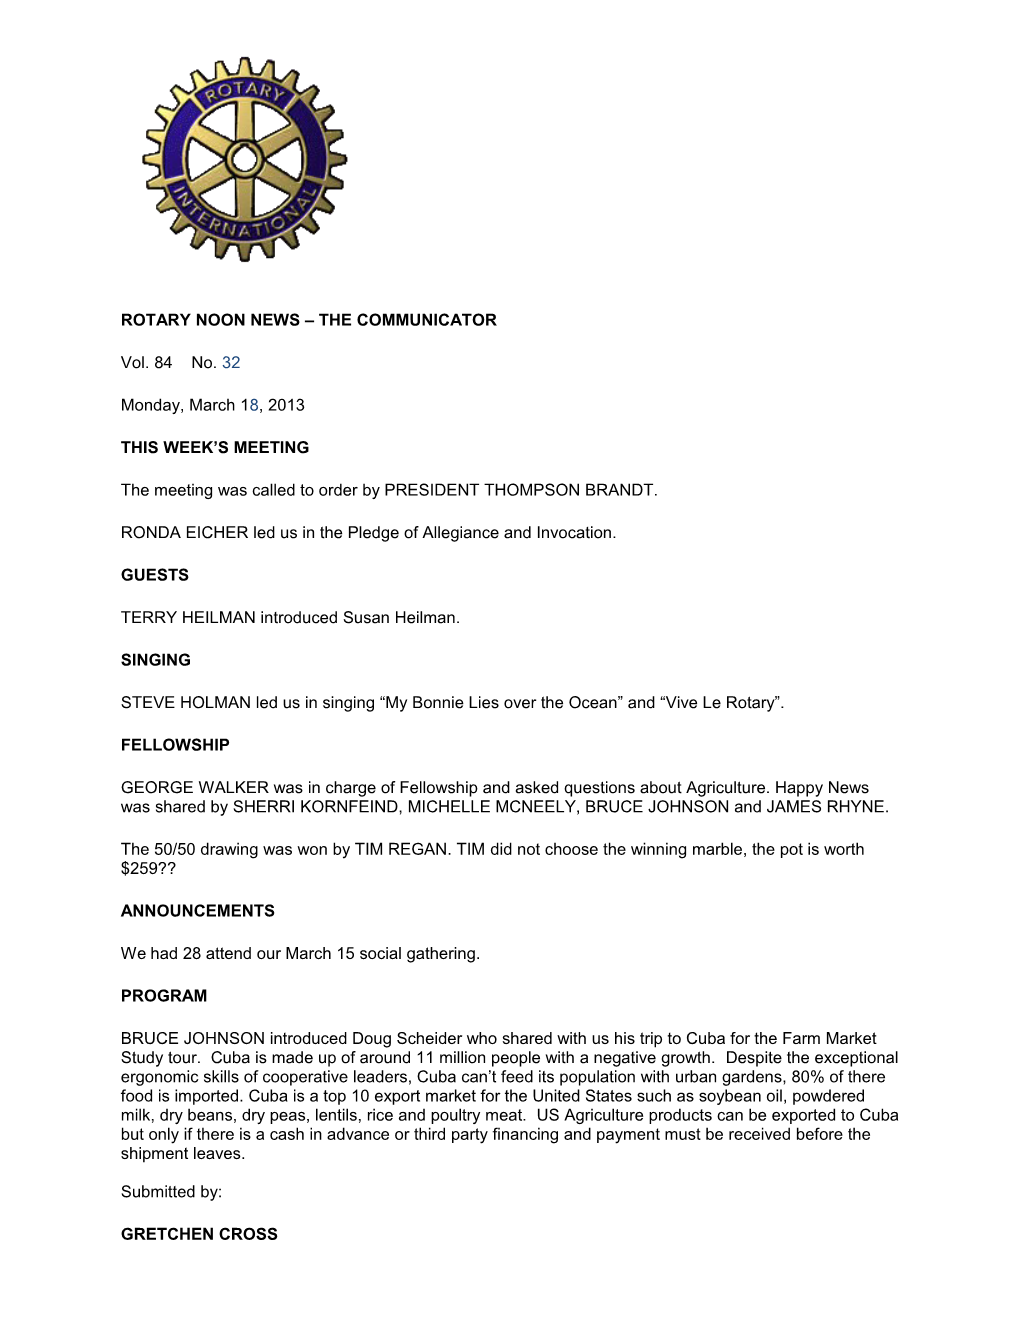 Rotary Noon News the Communicator s1